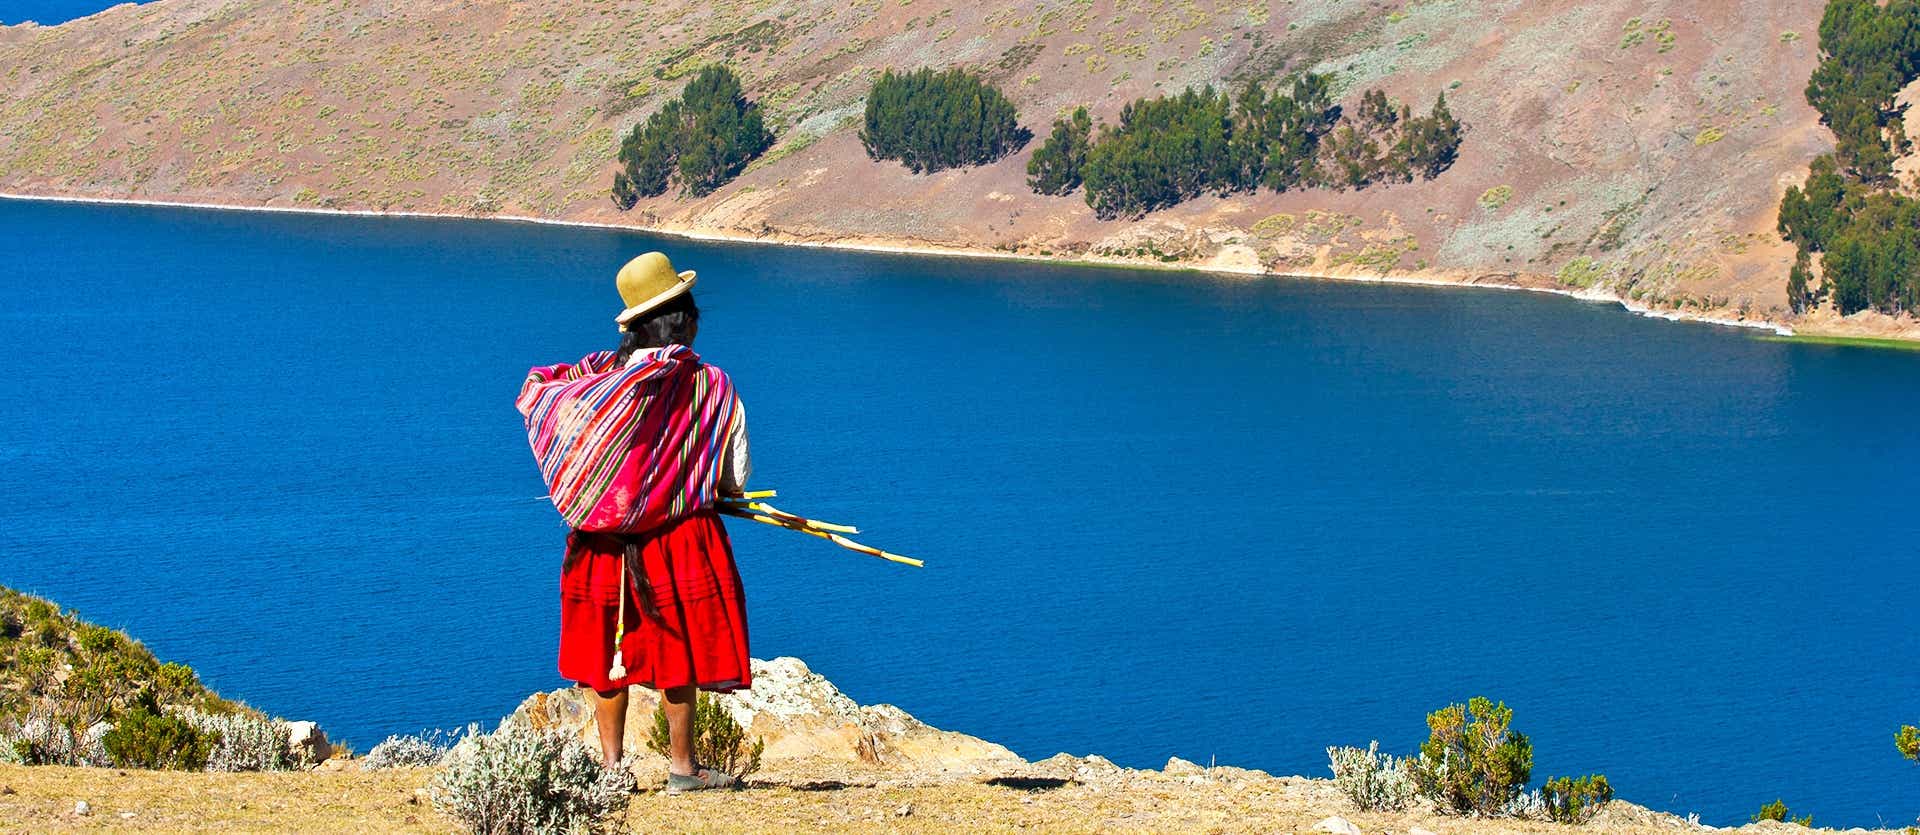 Island of the Sun <span class="iconos separador"></span> Lake Titicaca <span class="iconos separador"></span> Bolivia